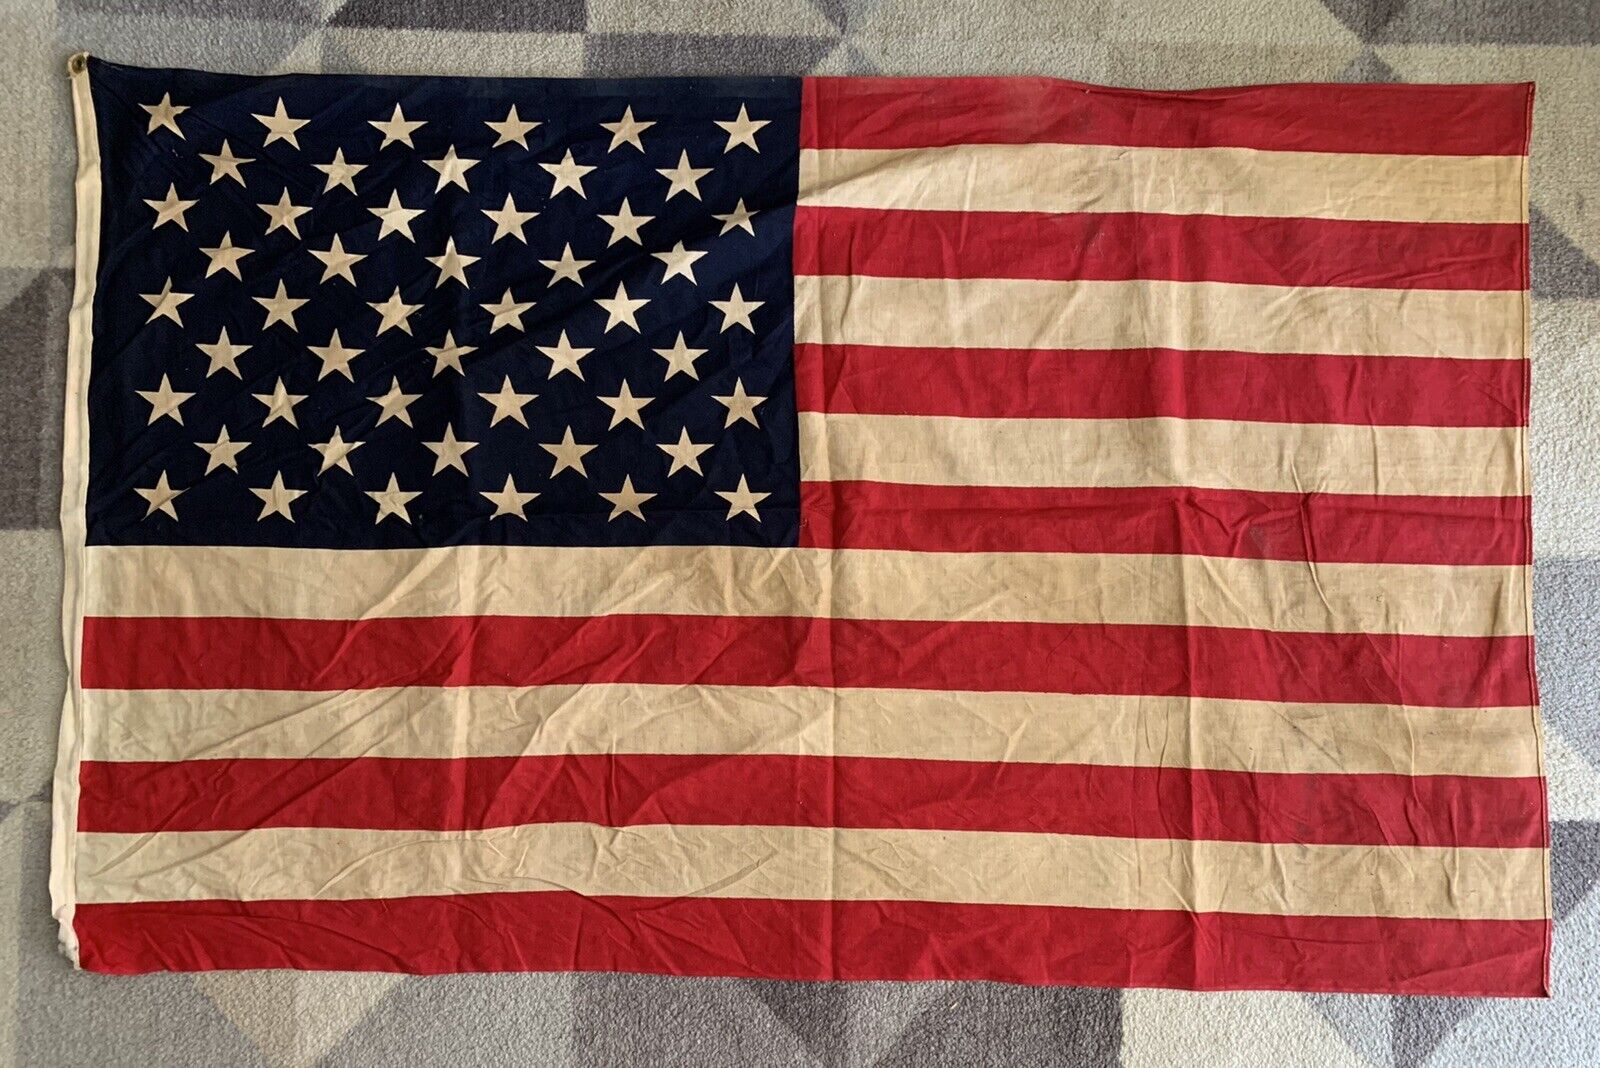 Vintage 3' x 5' American Flag United States of America